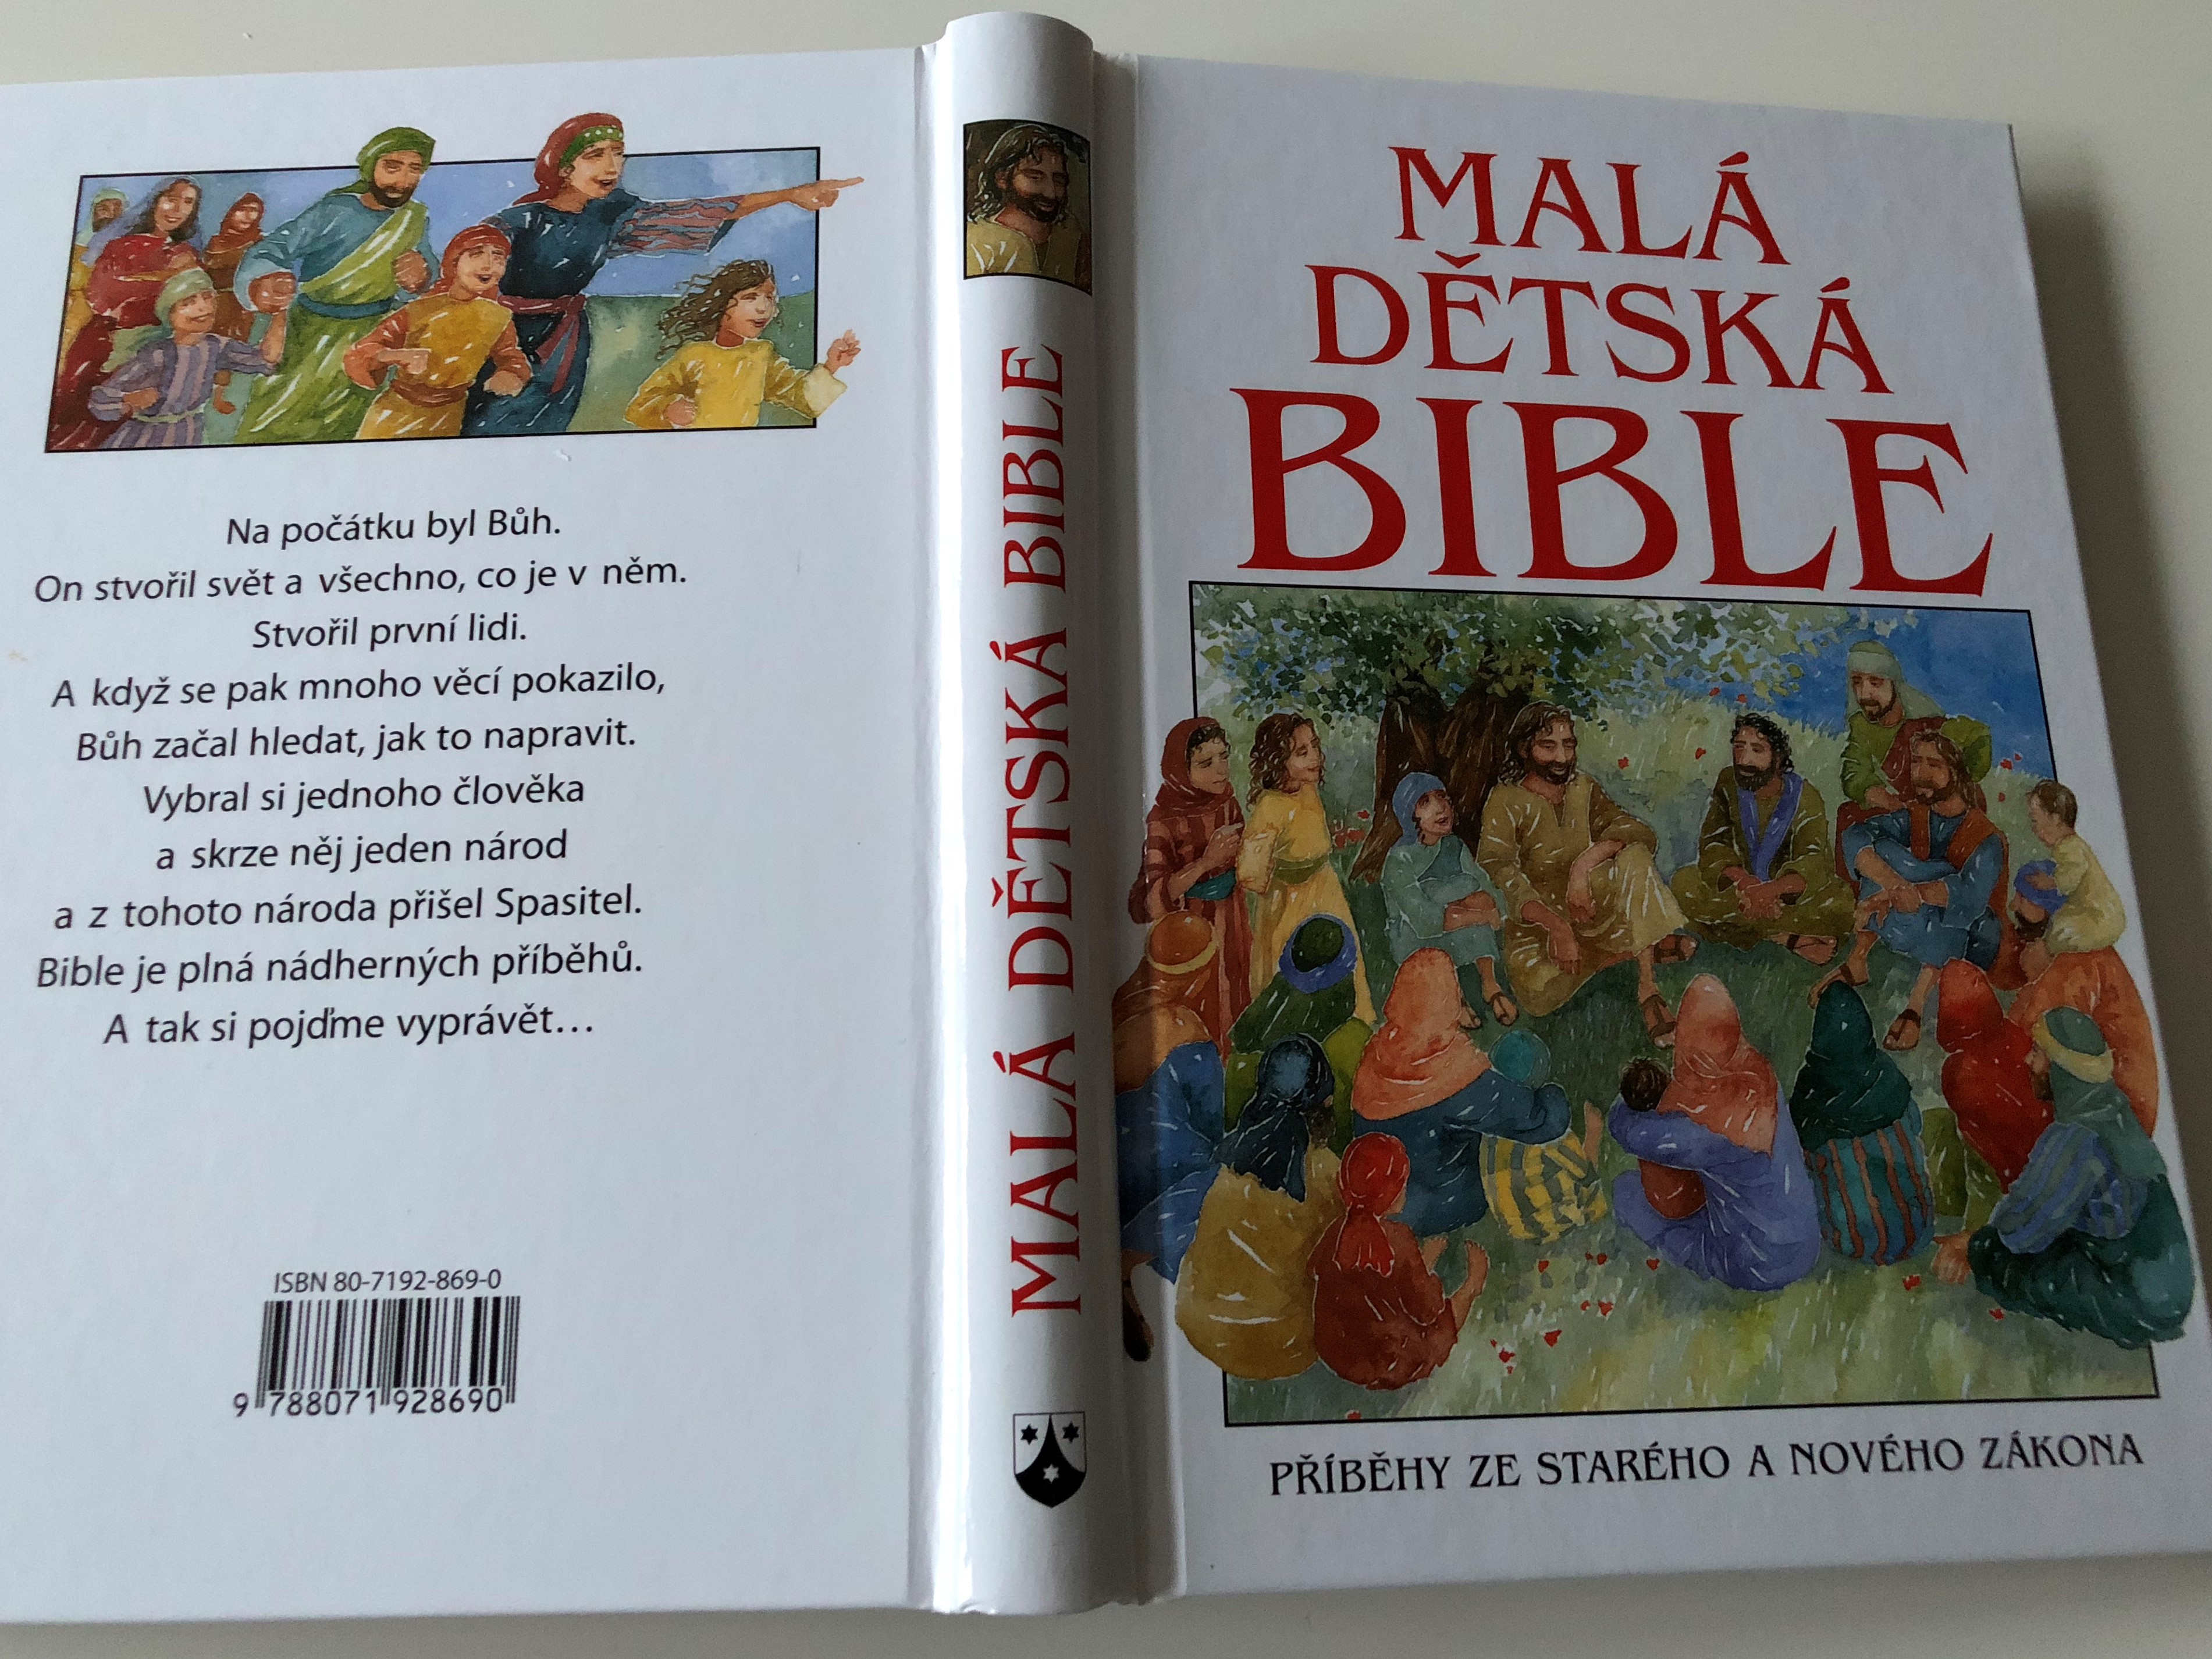 czech-edition-of-the-lion-s-children-s-bible-mala-detska-bible-pribehy-ze-stareho-a-noveho-zakona-14-.jpg